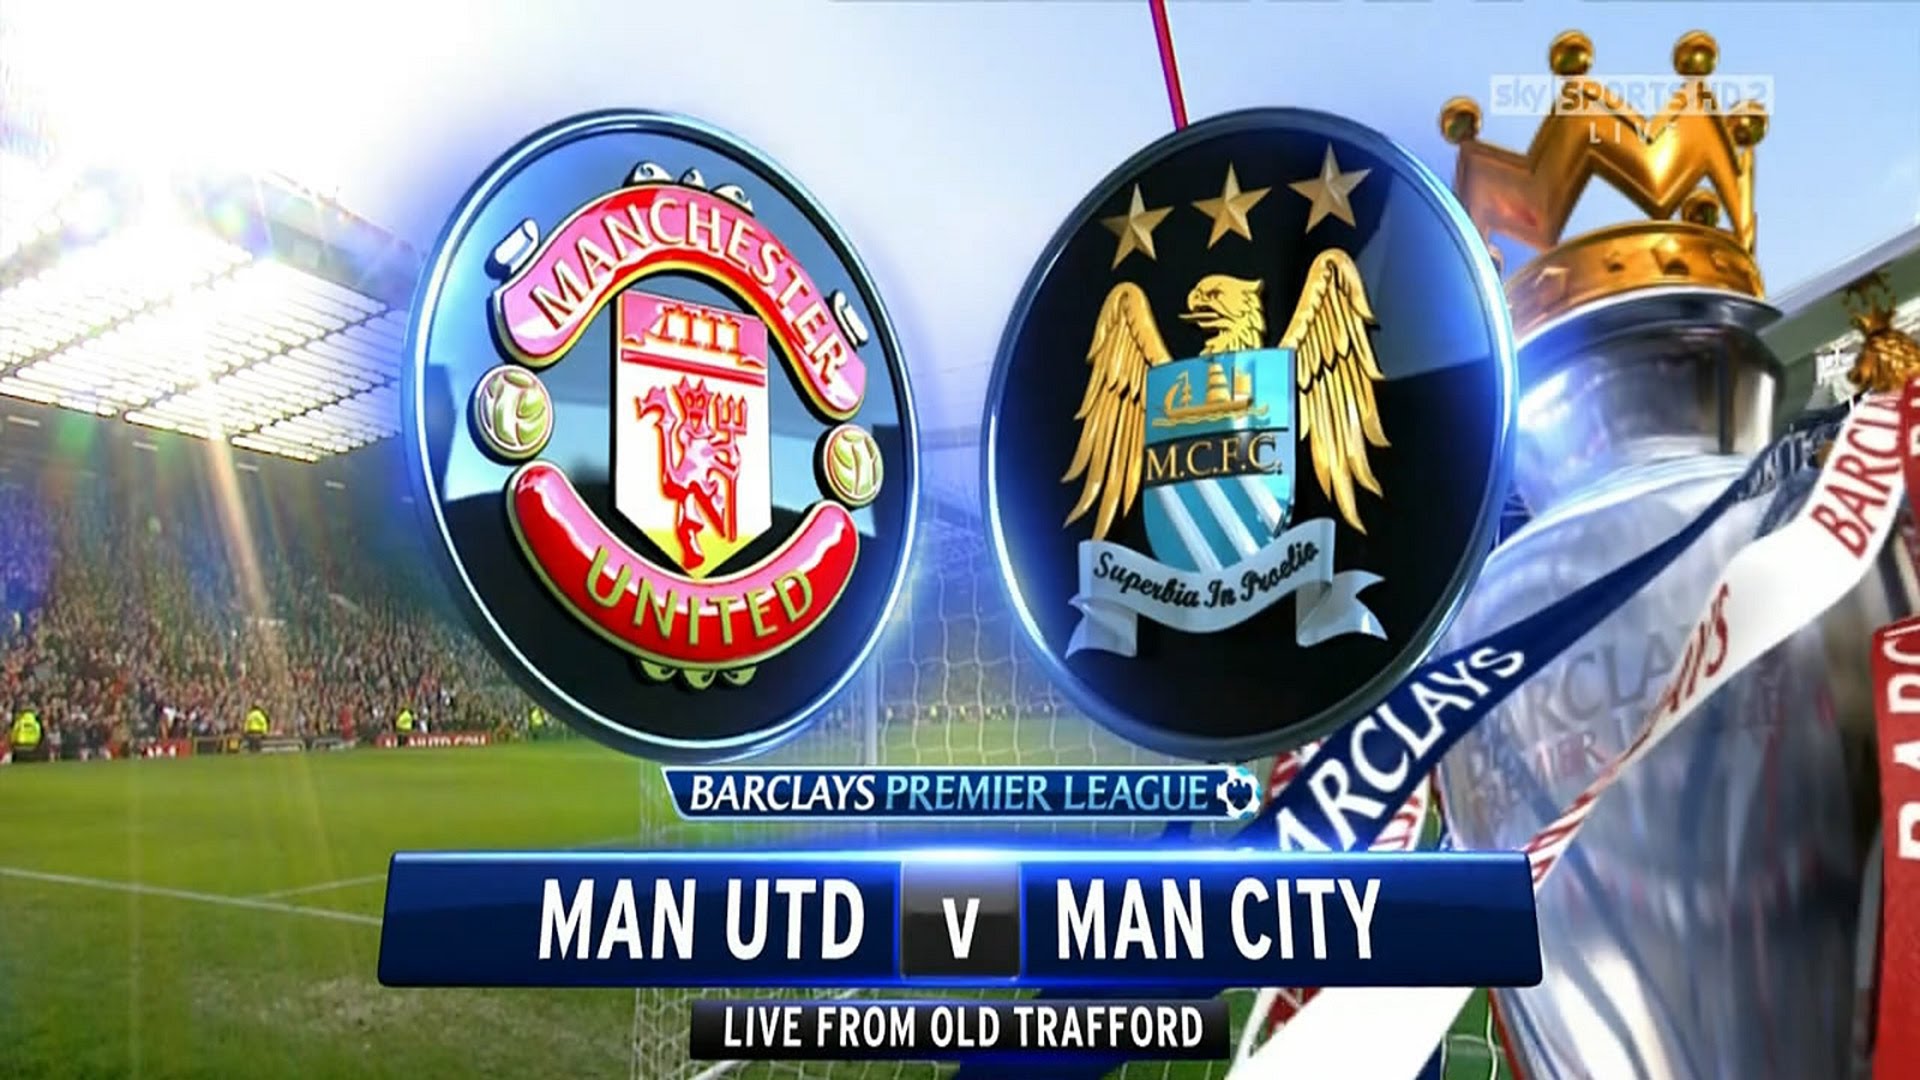 Manchester United vs Manchester City live on Sky Sports